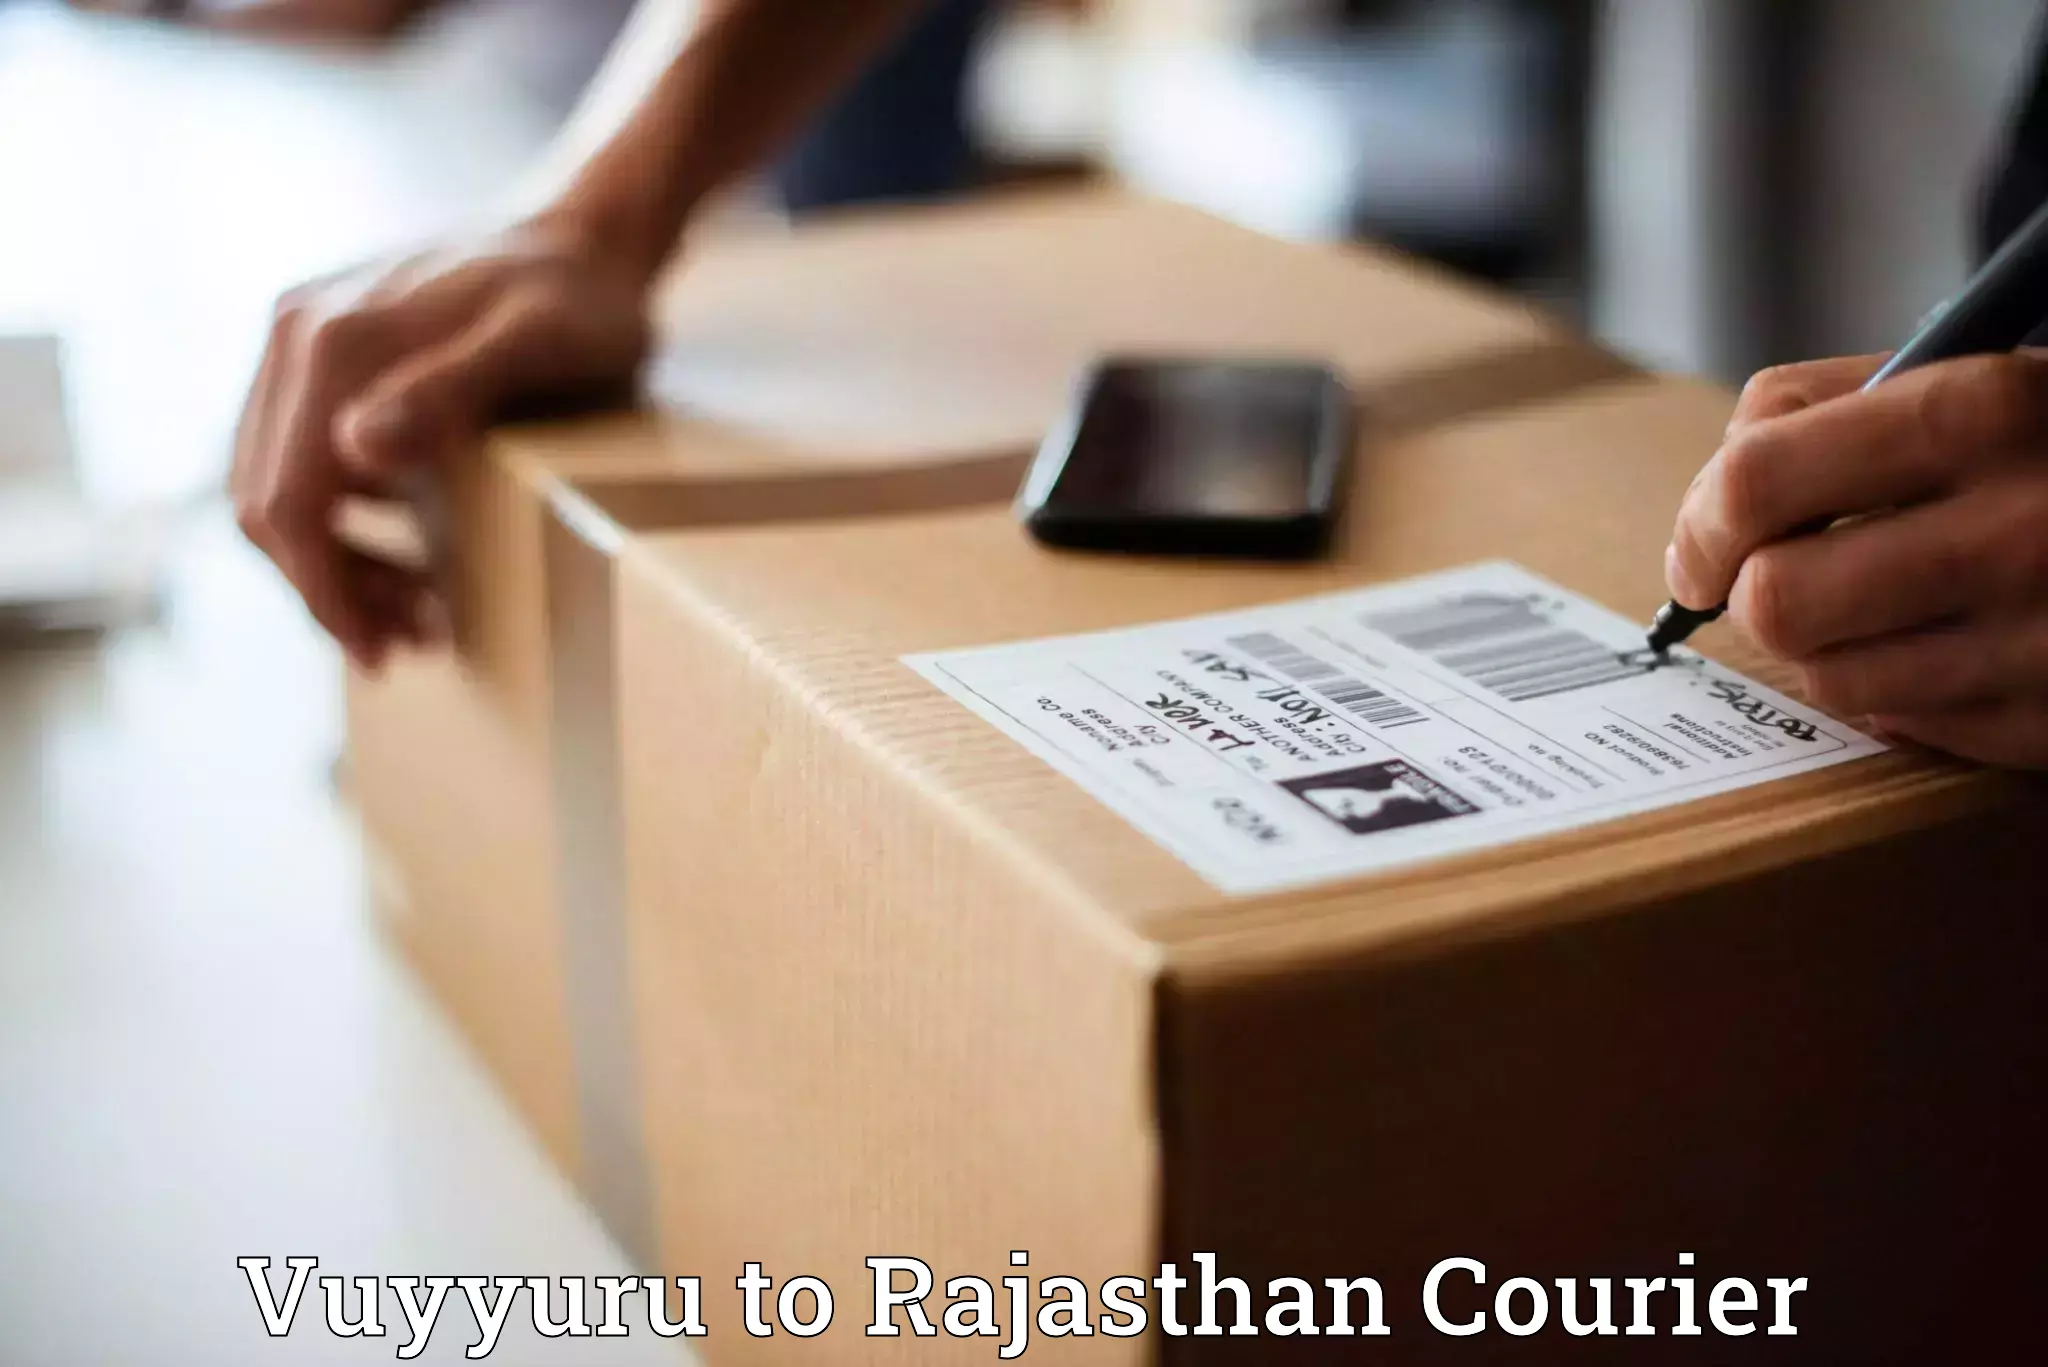 Smart shipping technology Vuyyuru to Rajasthan